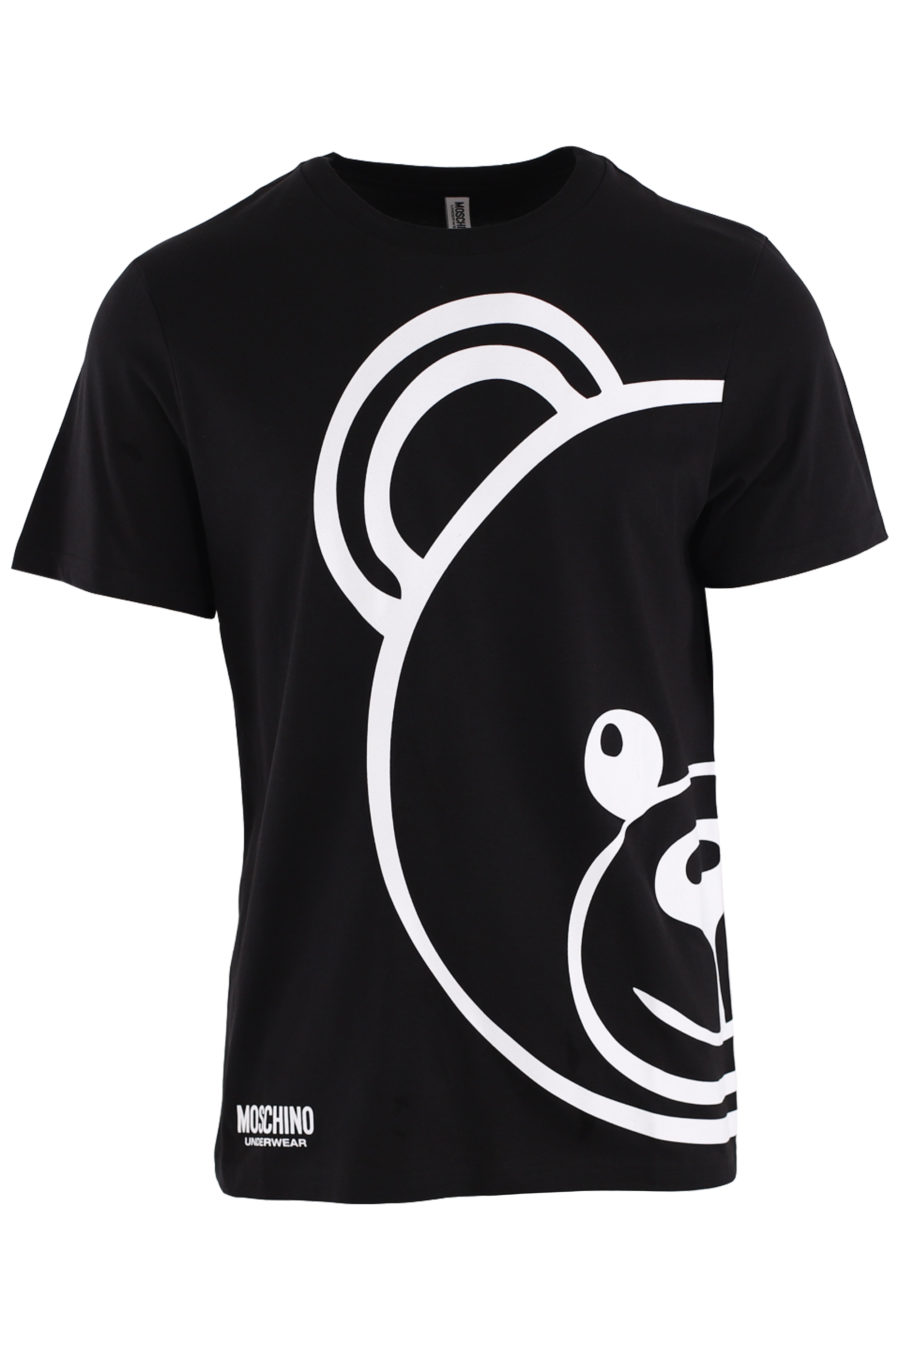 Camiseta negra con oso grande lateral y reverso - IMG 8824